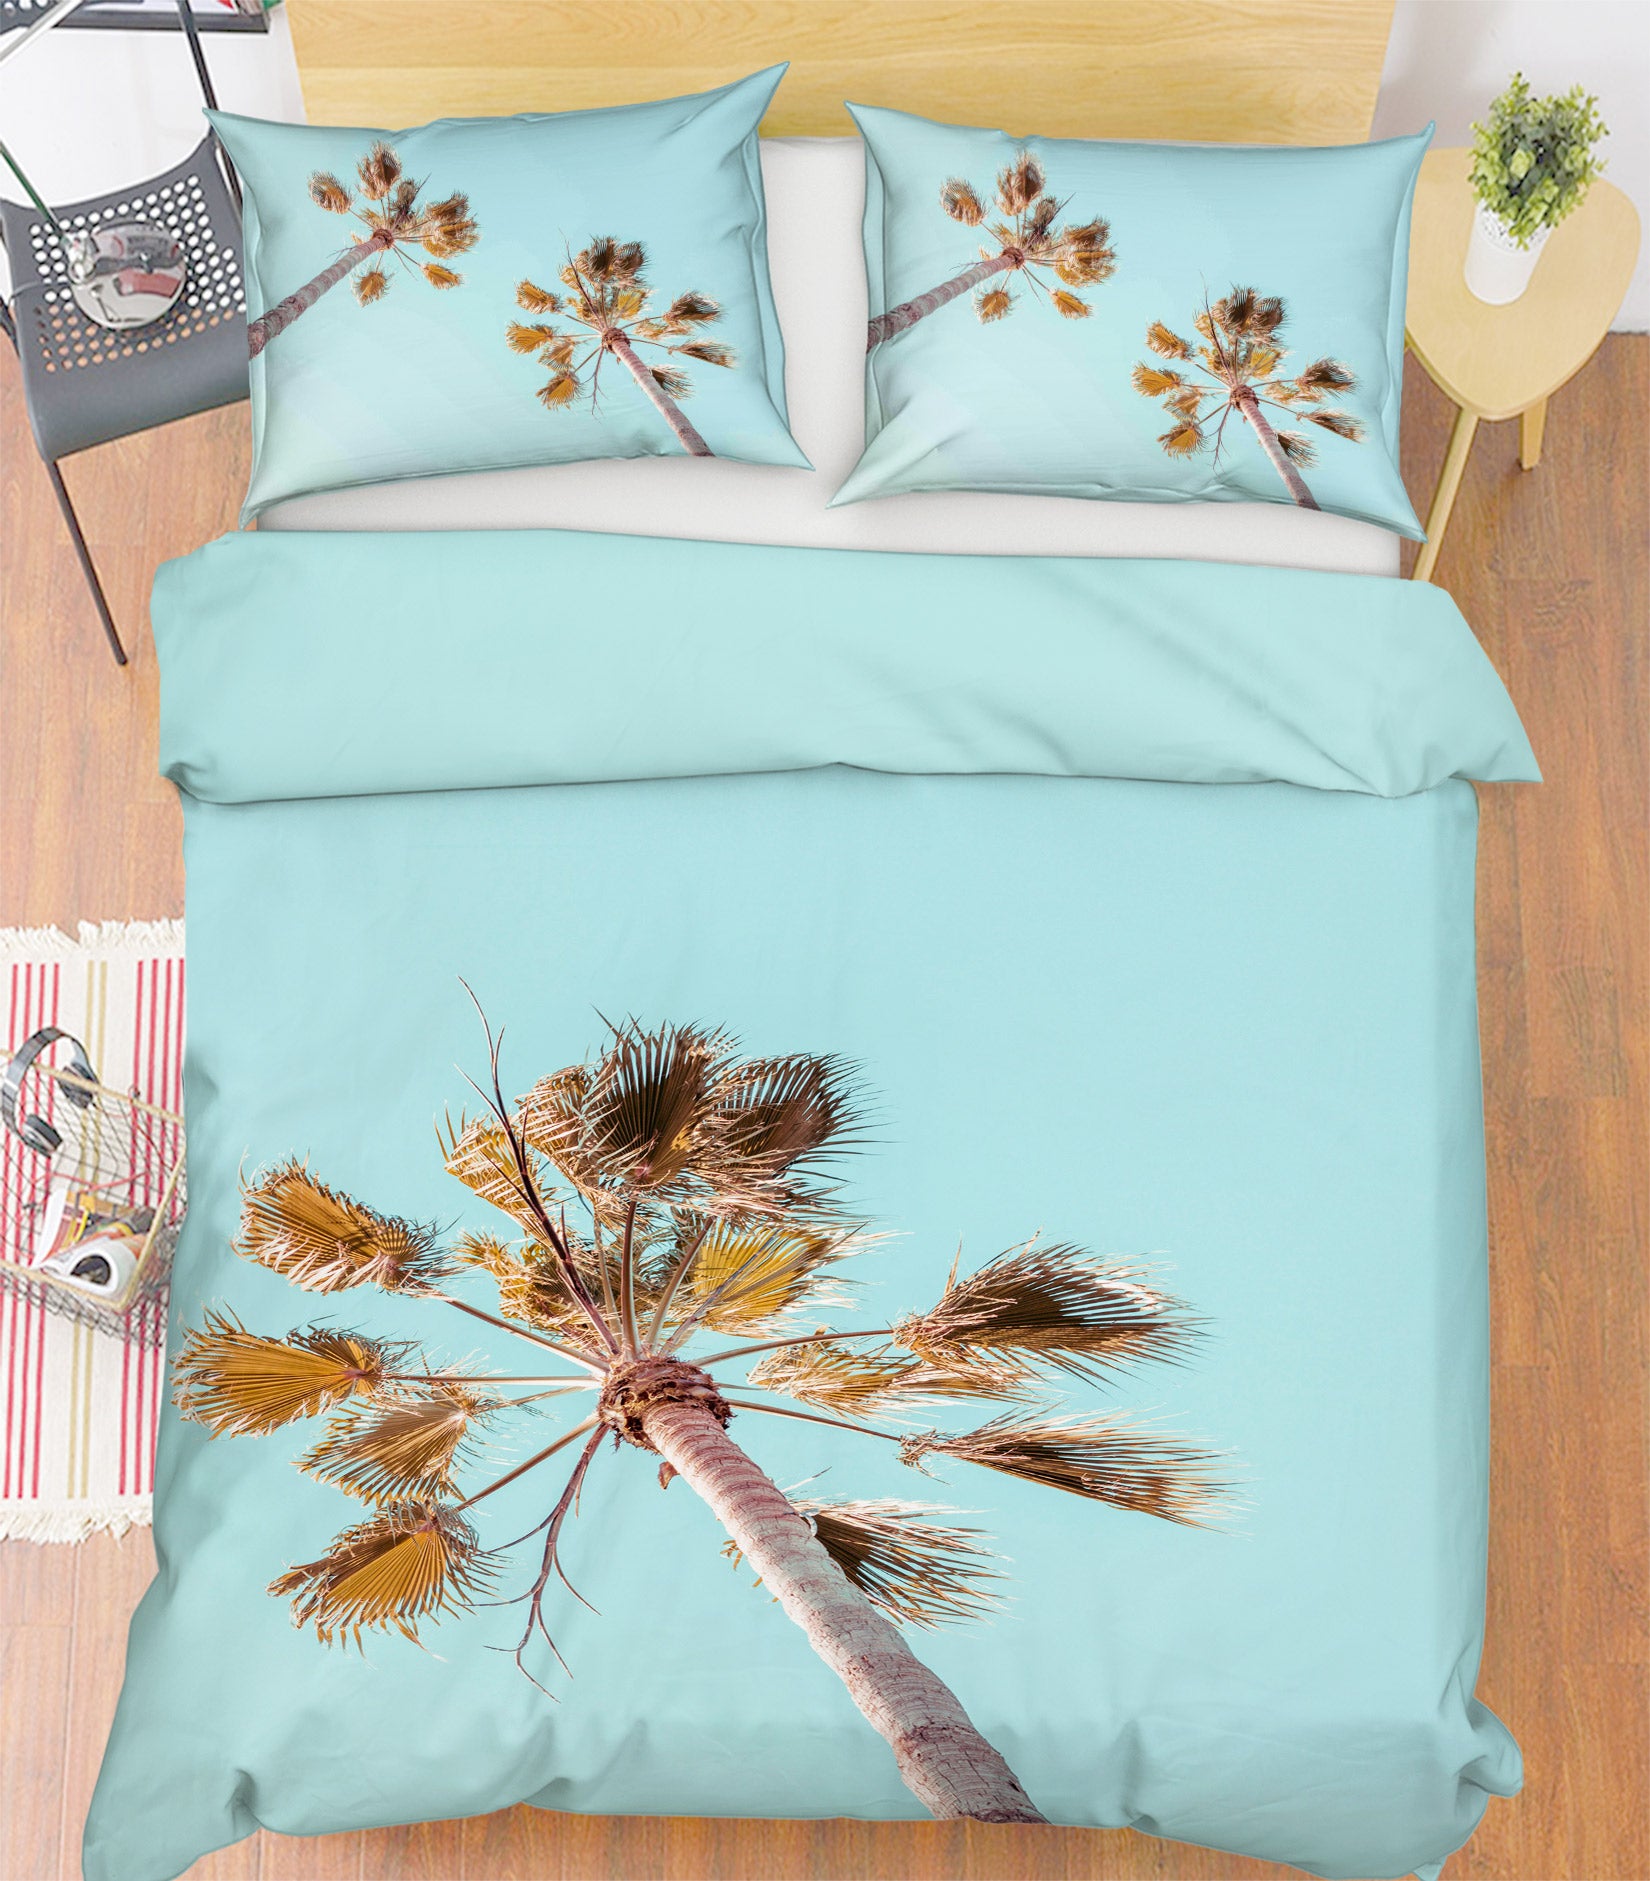 3D Sky Coconut Tree 6950 Assaf Frank Bedding Bed Pillowcases Quilt Cover Duvet Cover